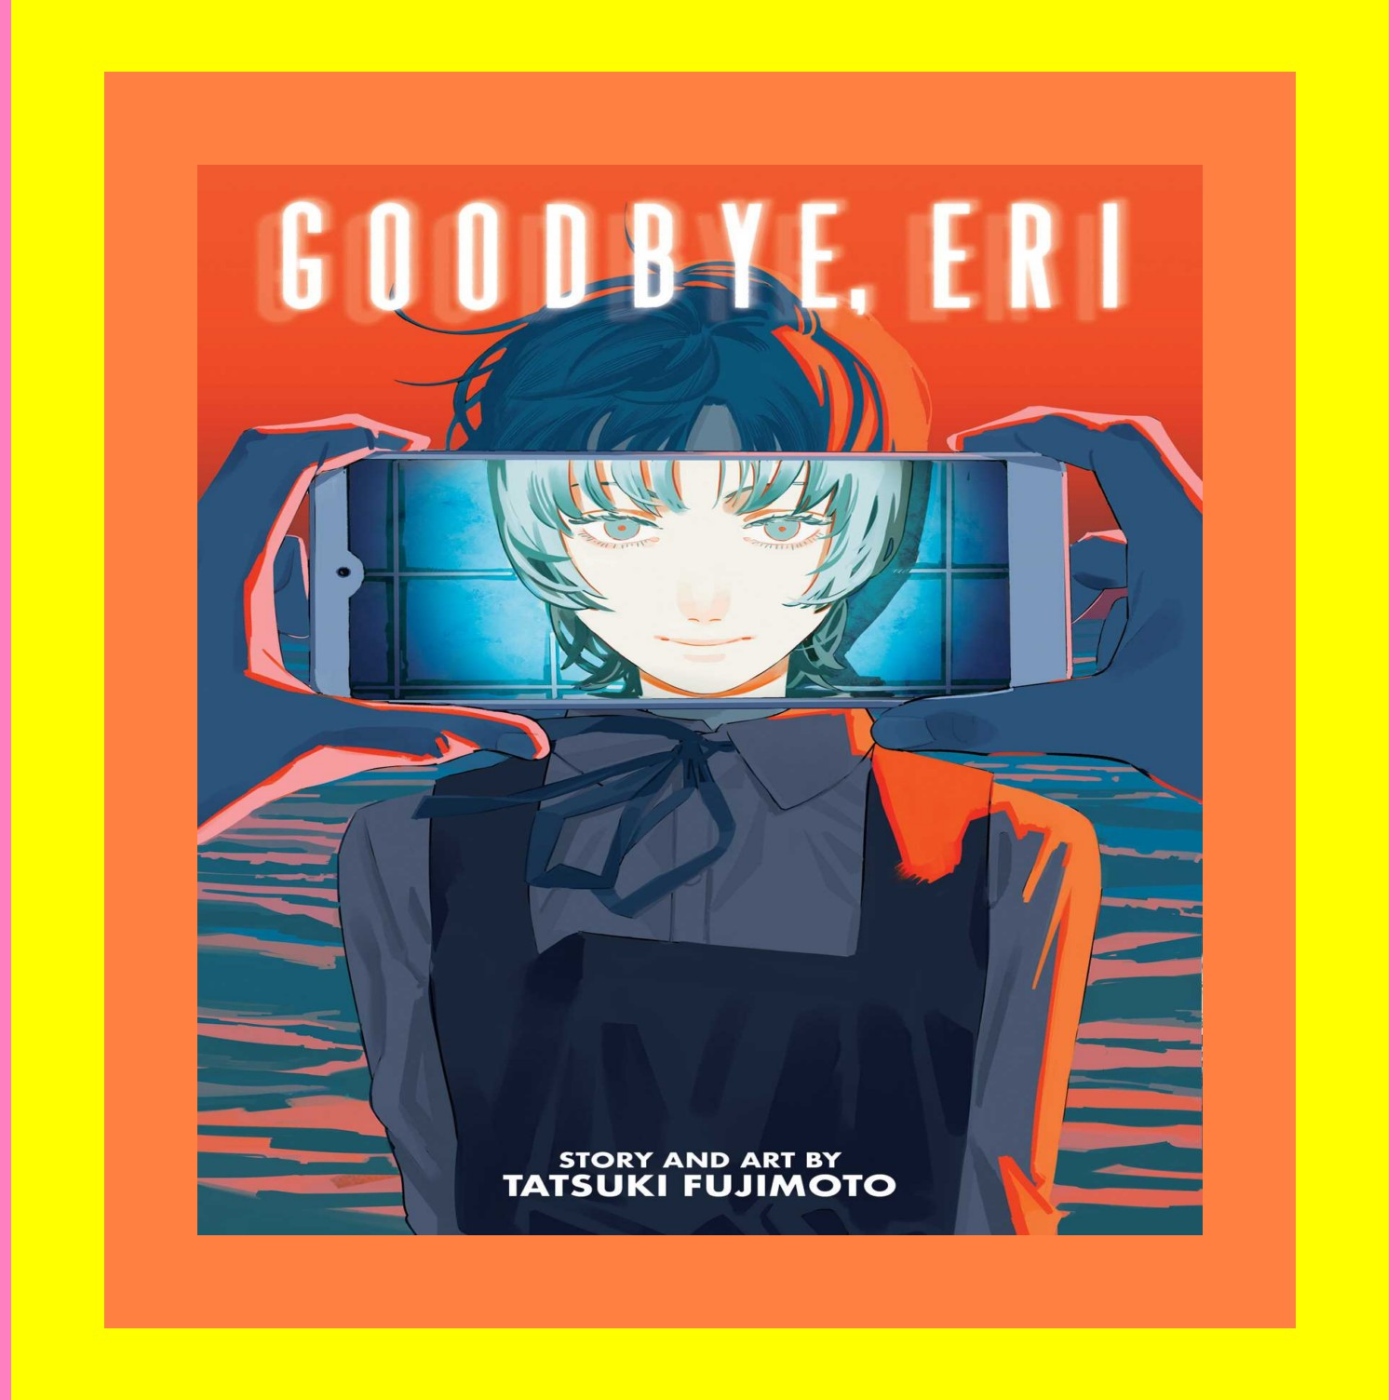 Goodbye, Eri Manga eBook by Tatsuki Fujimoto - EPUB Book